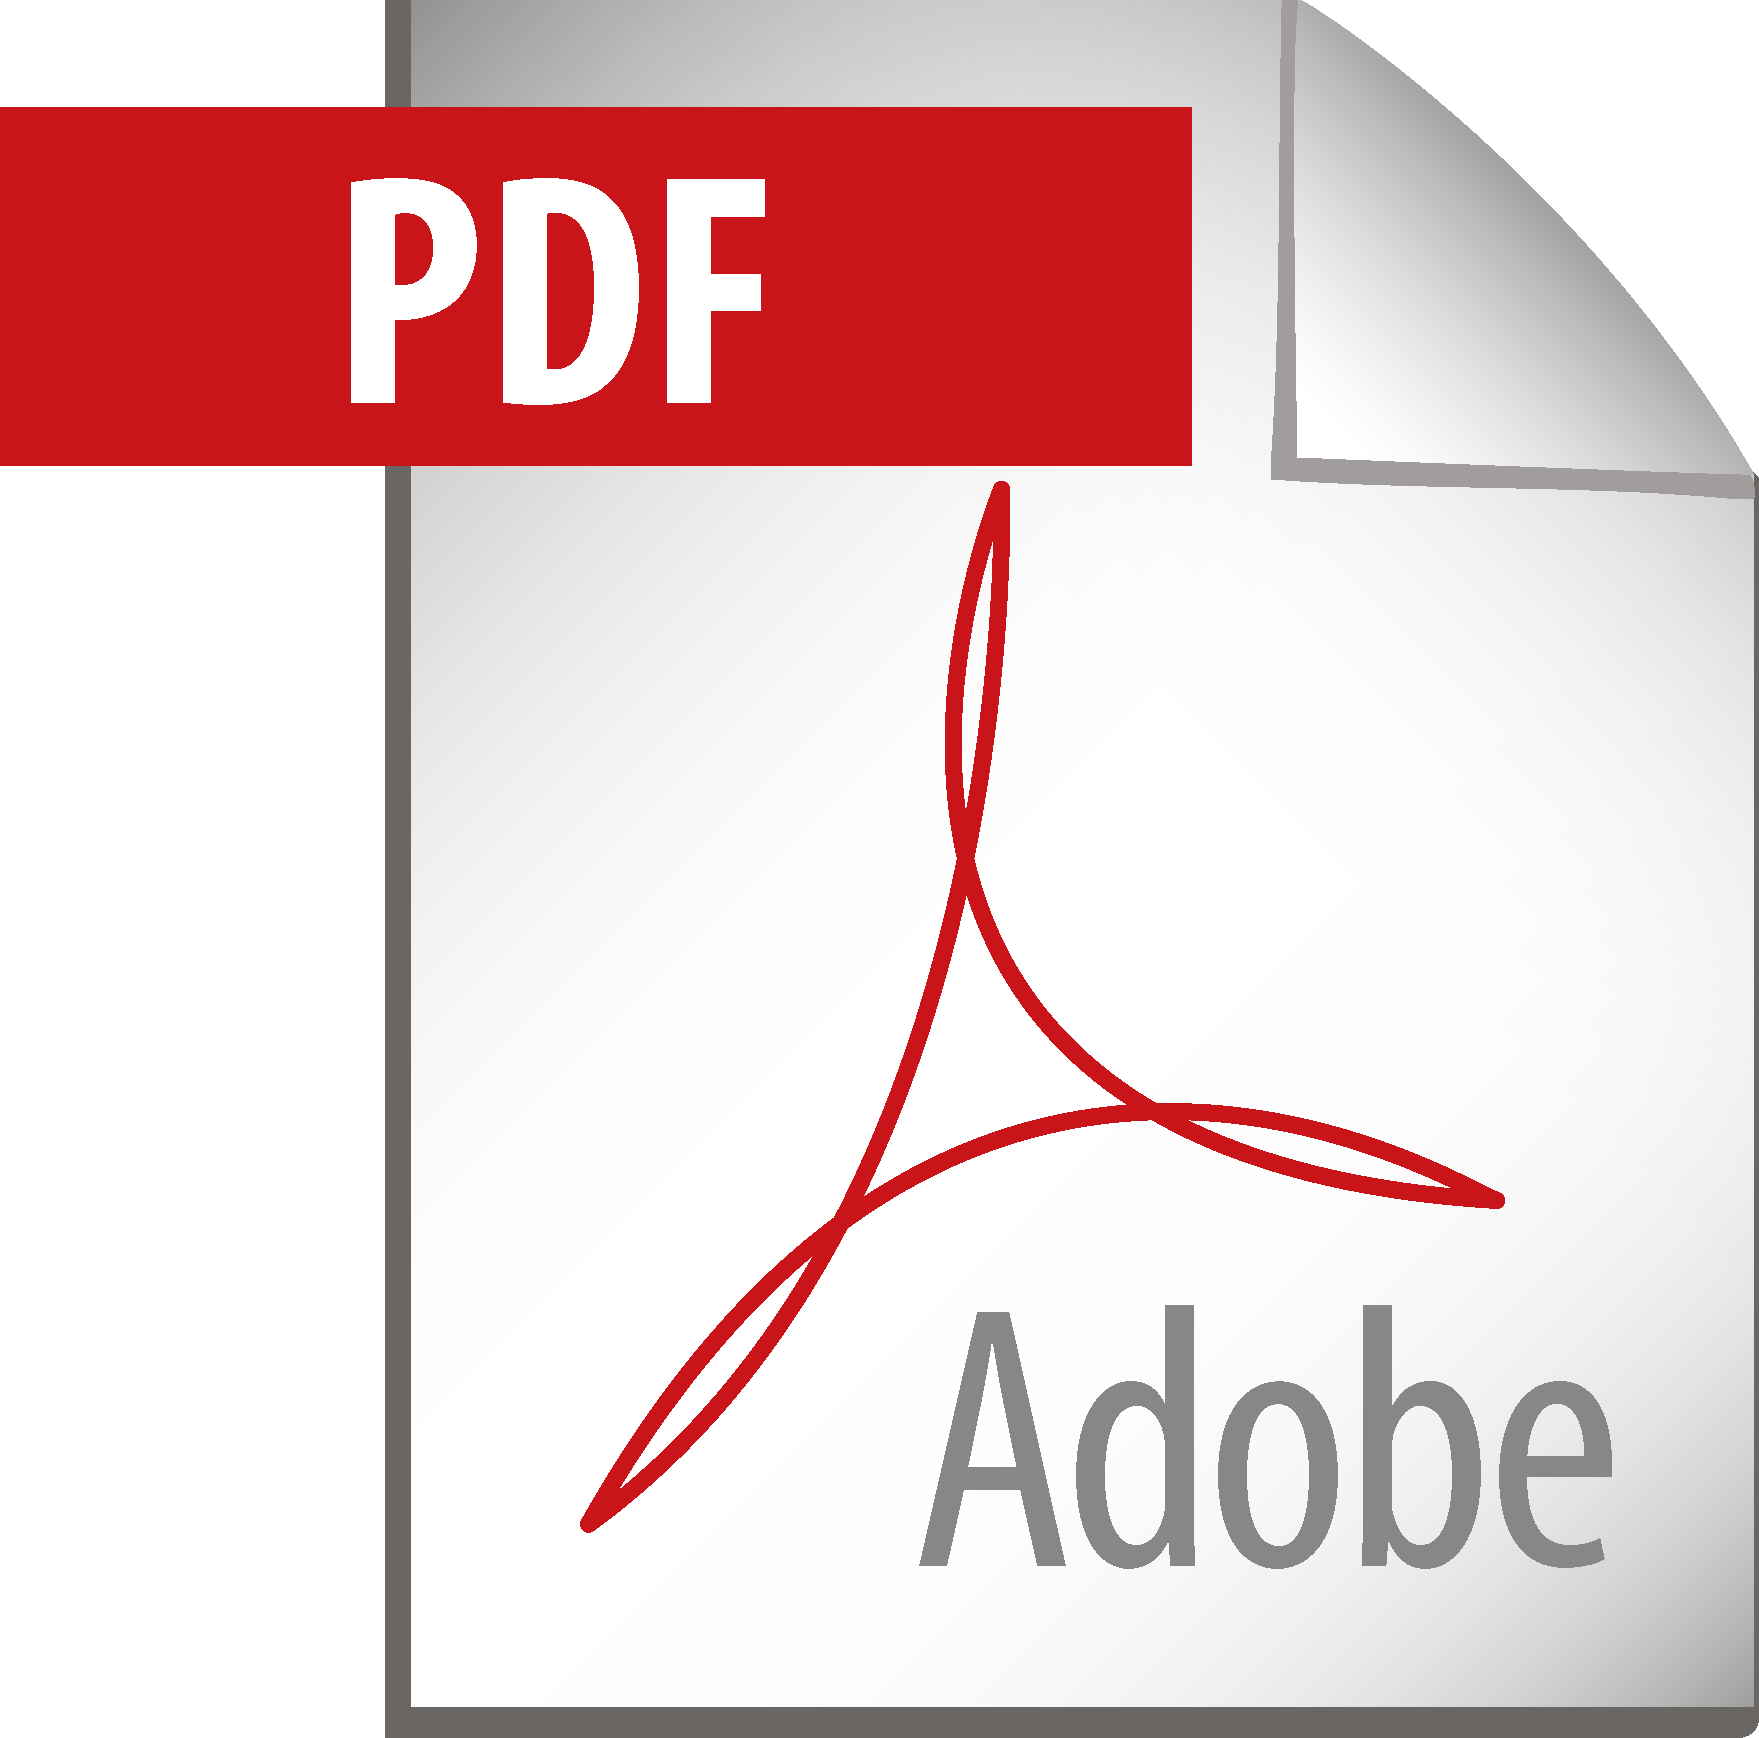 Adobe PDF Logo - Adobe PDF Logo Free Vector Download